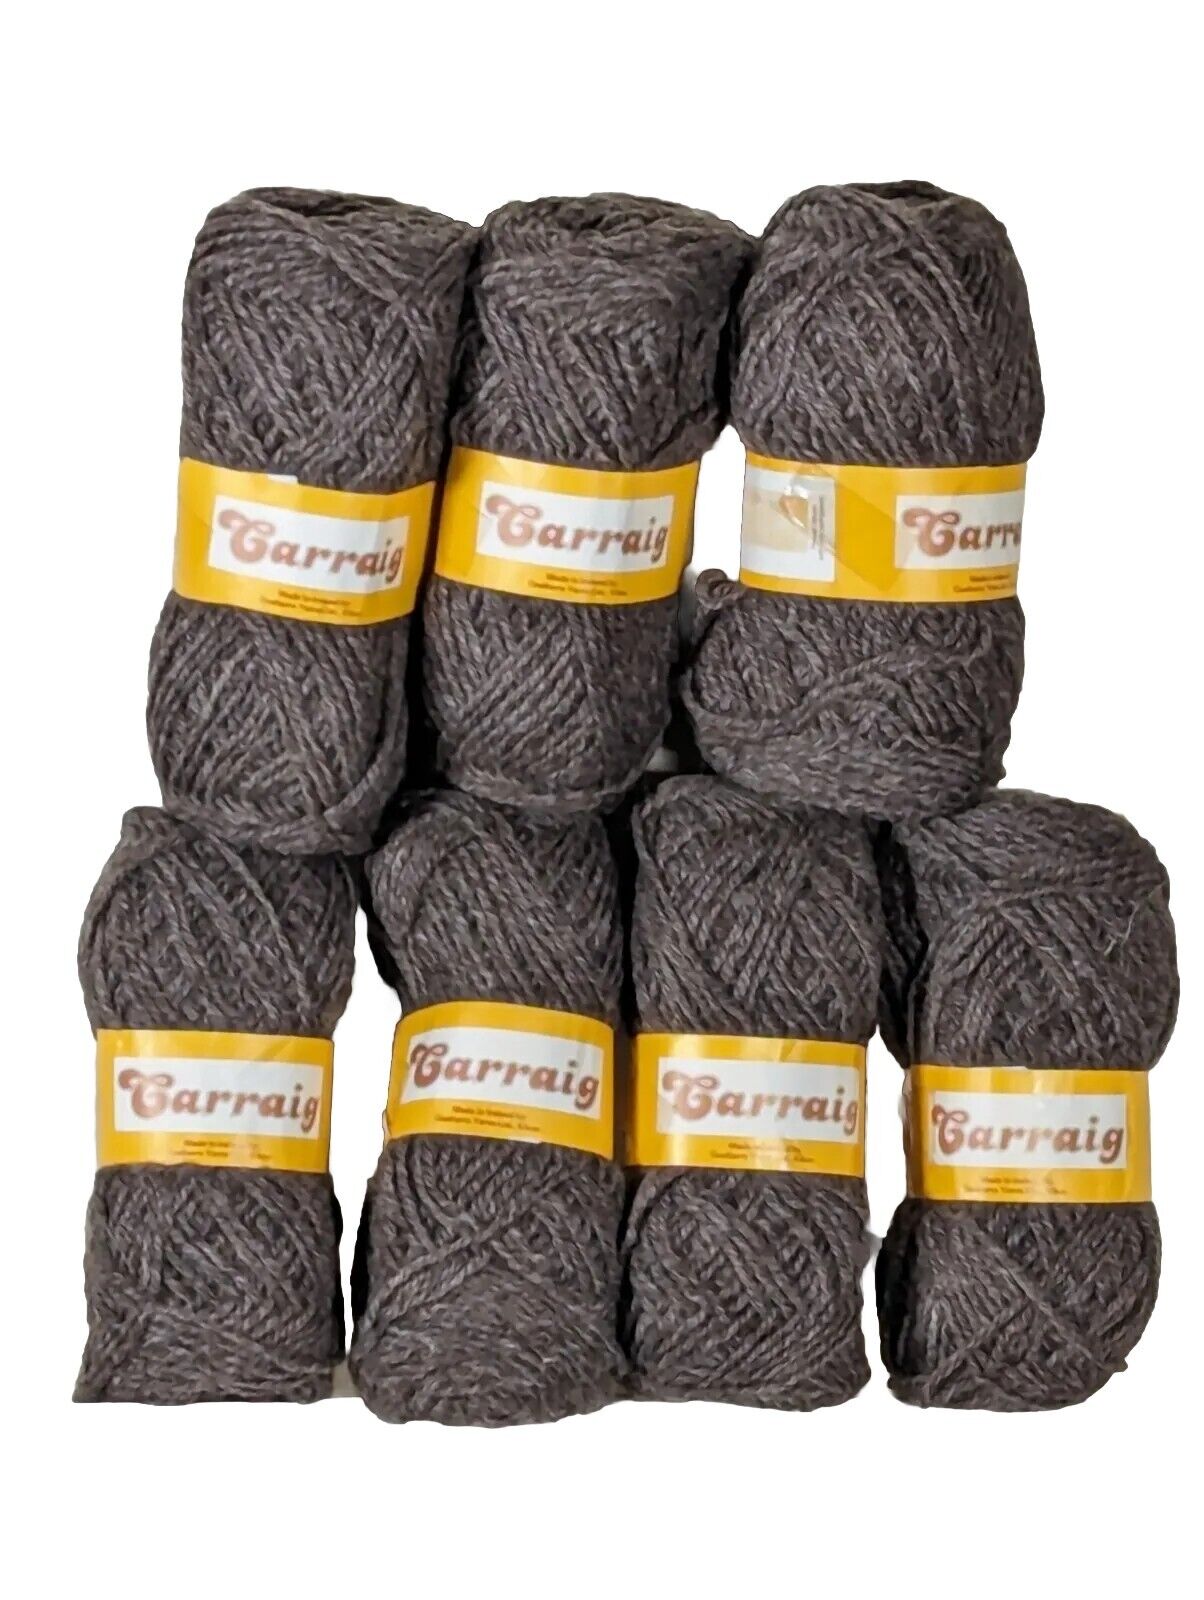 Yarn knitting Yarn Carriaig 100%wool 700grams Mothproofed Ireland Lot 7